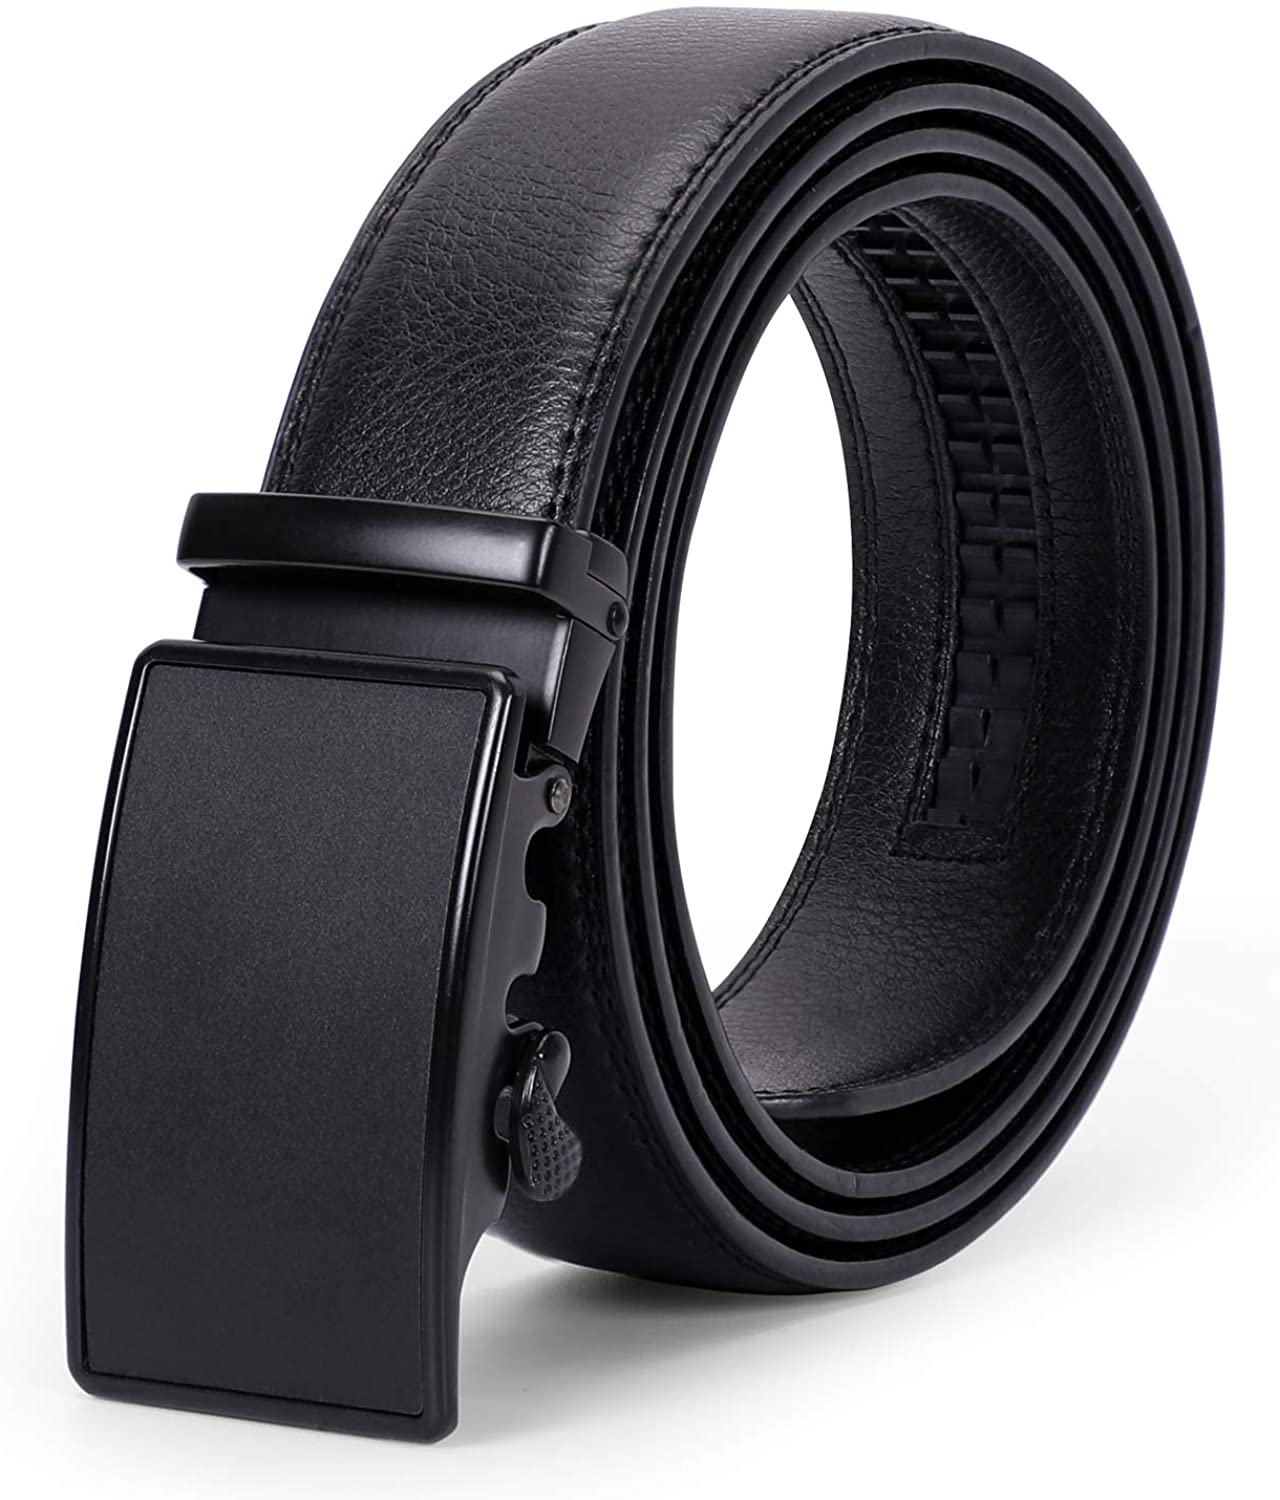 Men's Leather Ratchet Belt Comfort Dress Belt for Men with Automatic ...